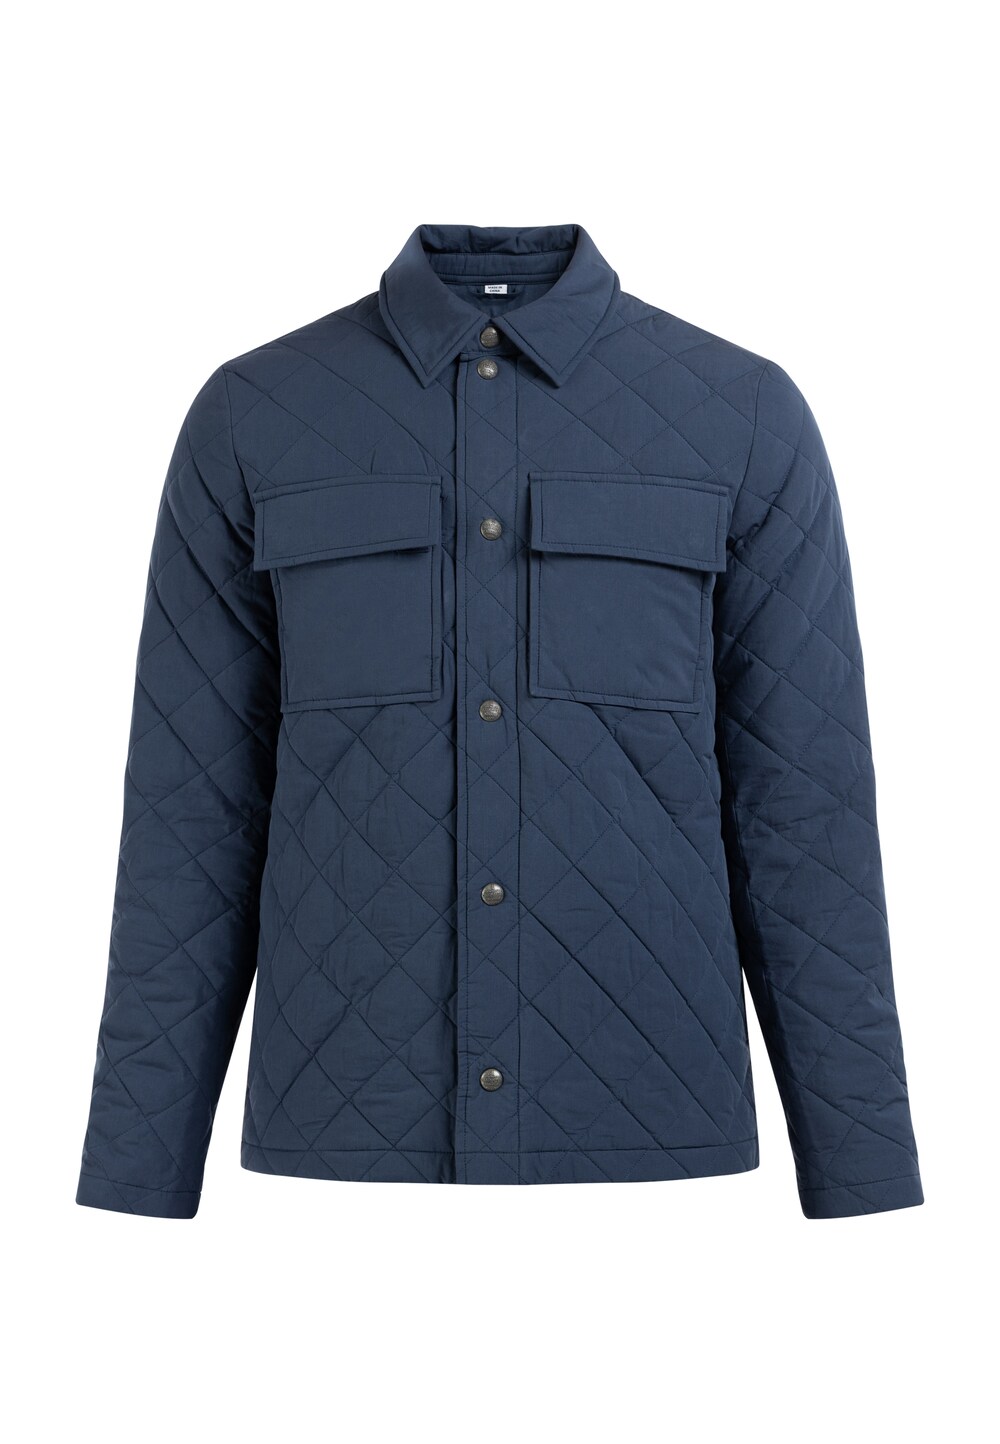 Межсезонная куртка DreiMaster Vintage, ультрамарин синий межсезонная куртка dreimaster ночной синий